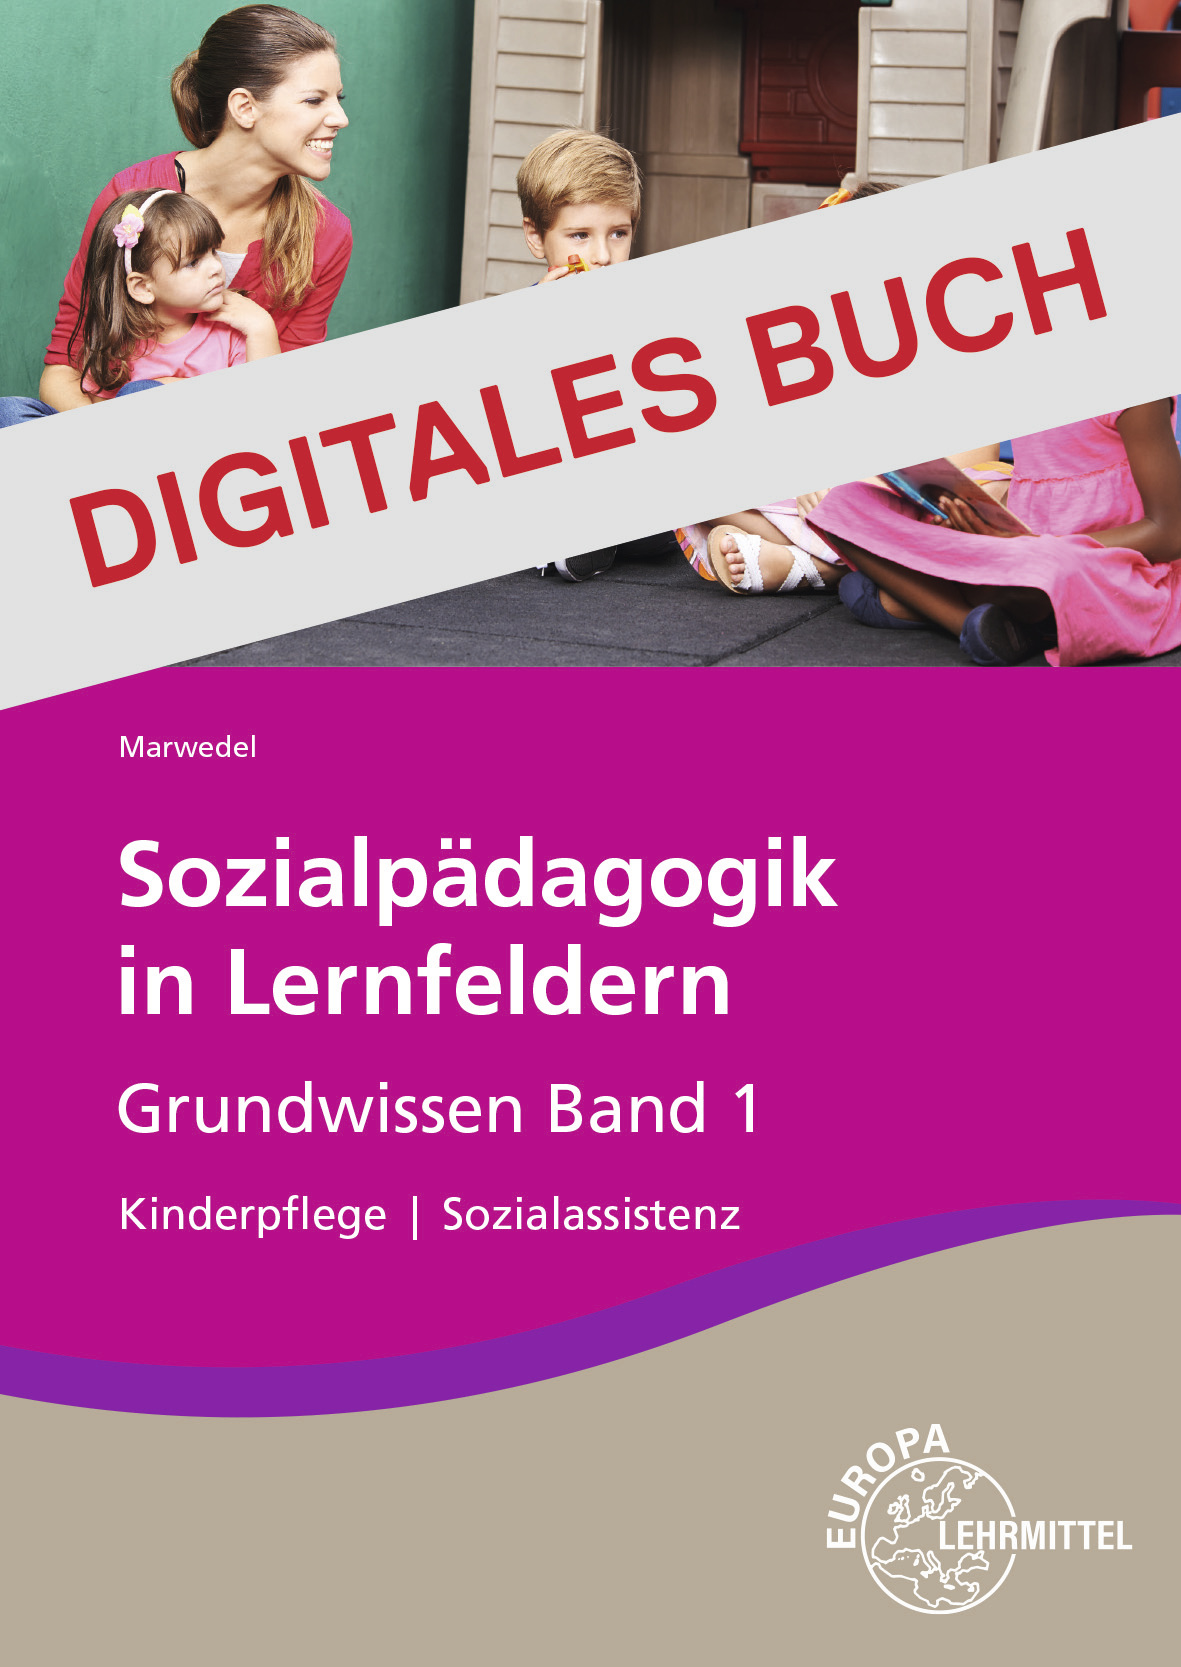 Sozialpädagogik in Lernfeldern Grundwissen Band 1 - Digitales Buch